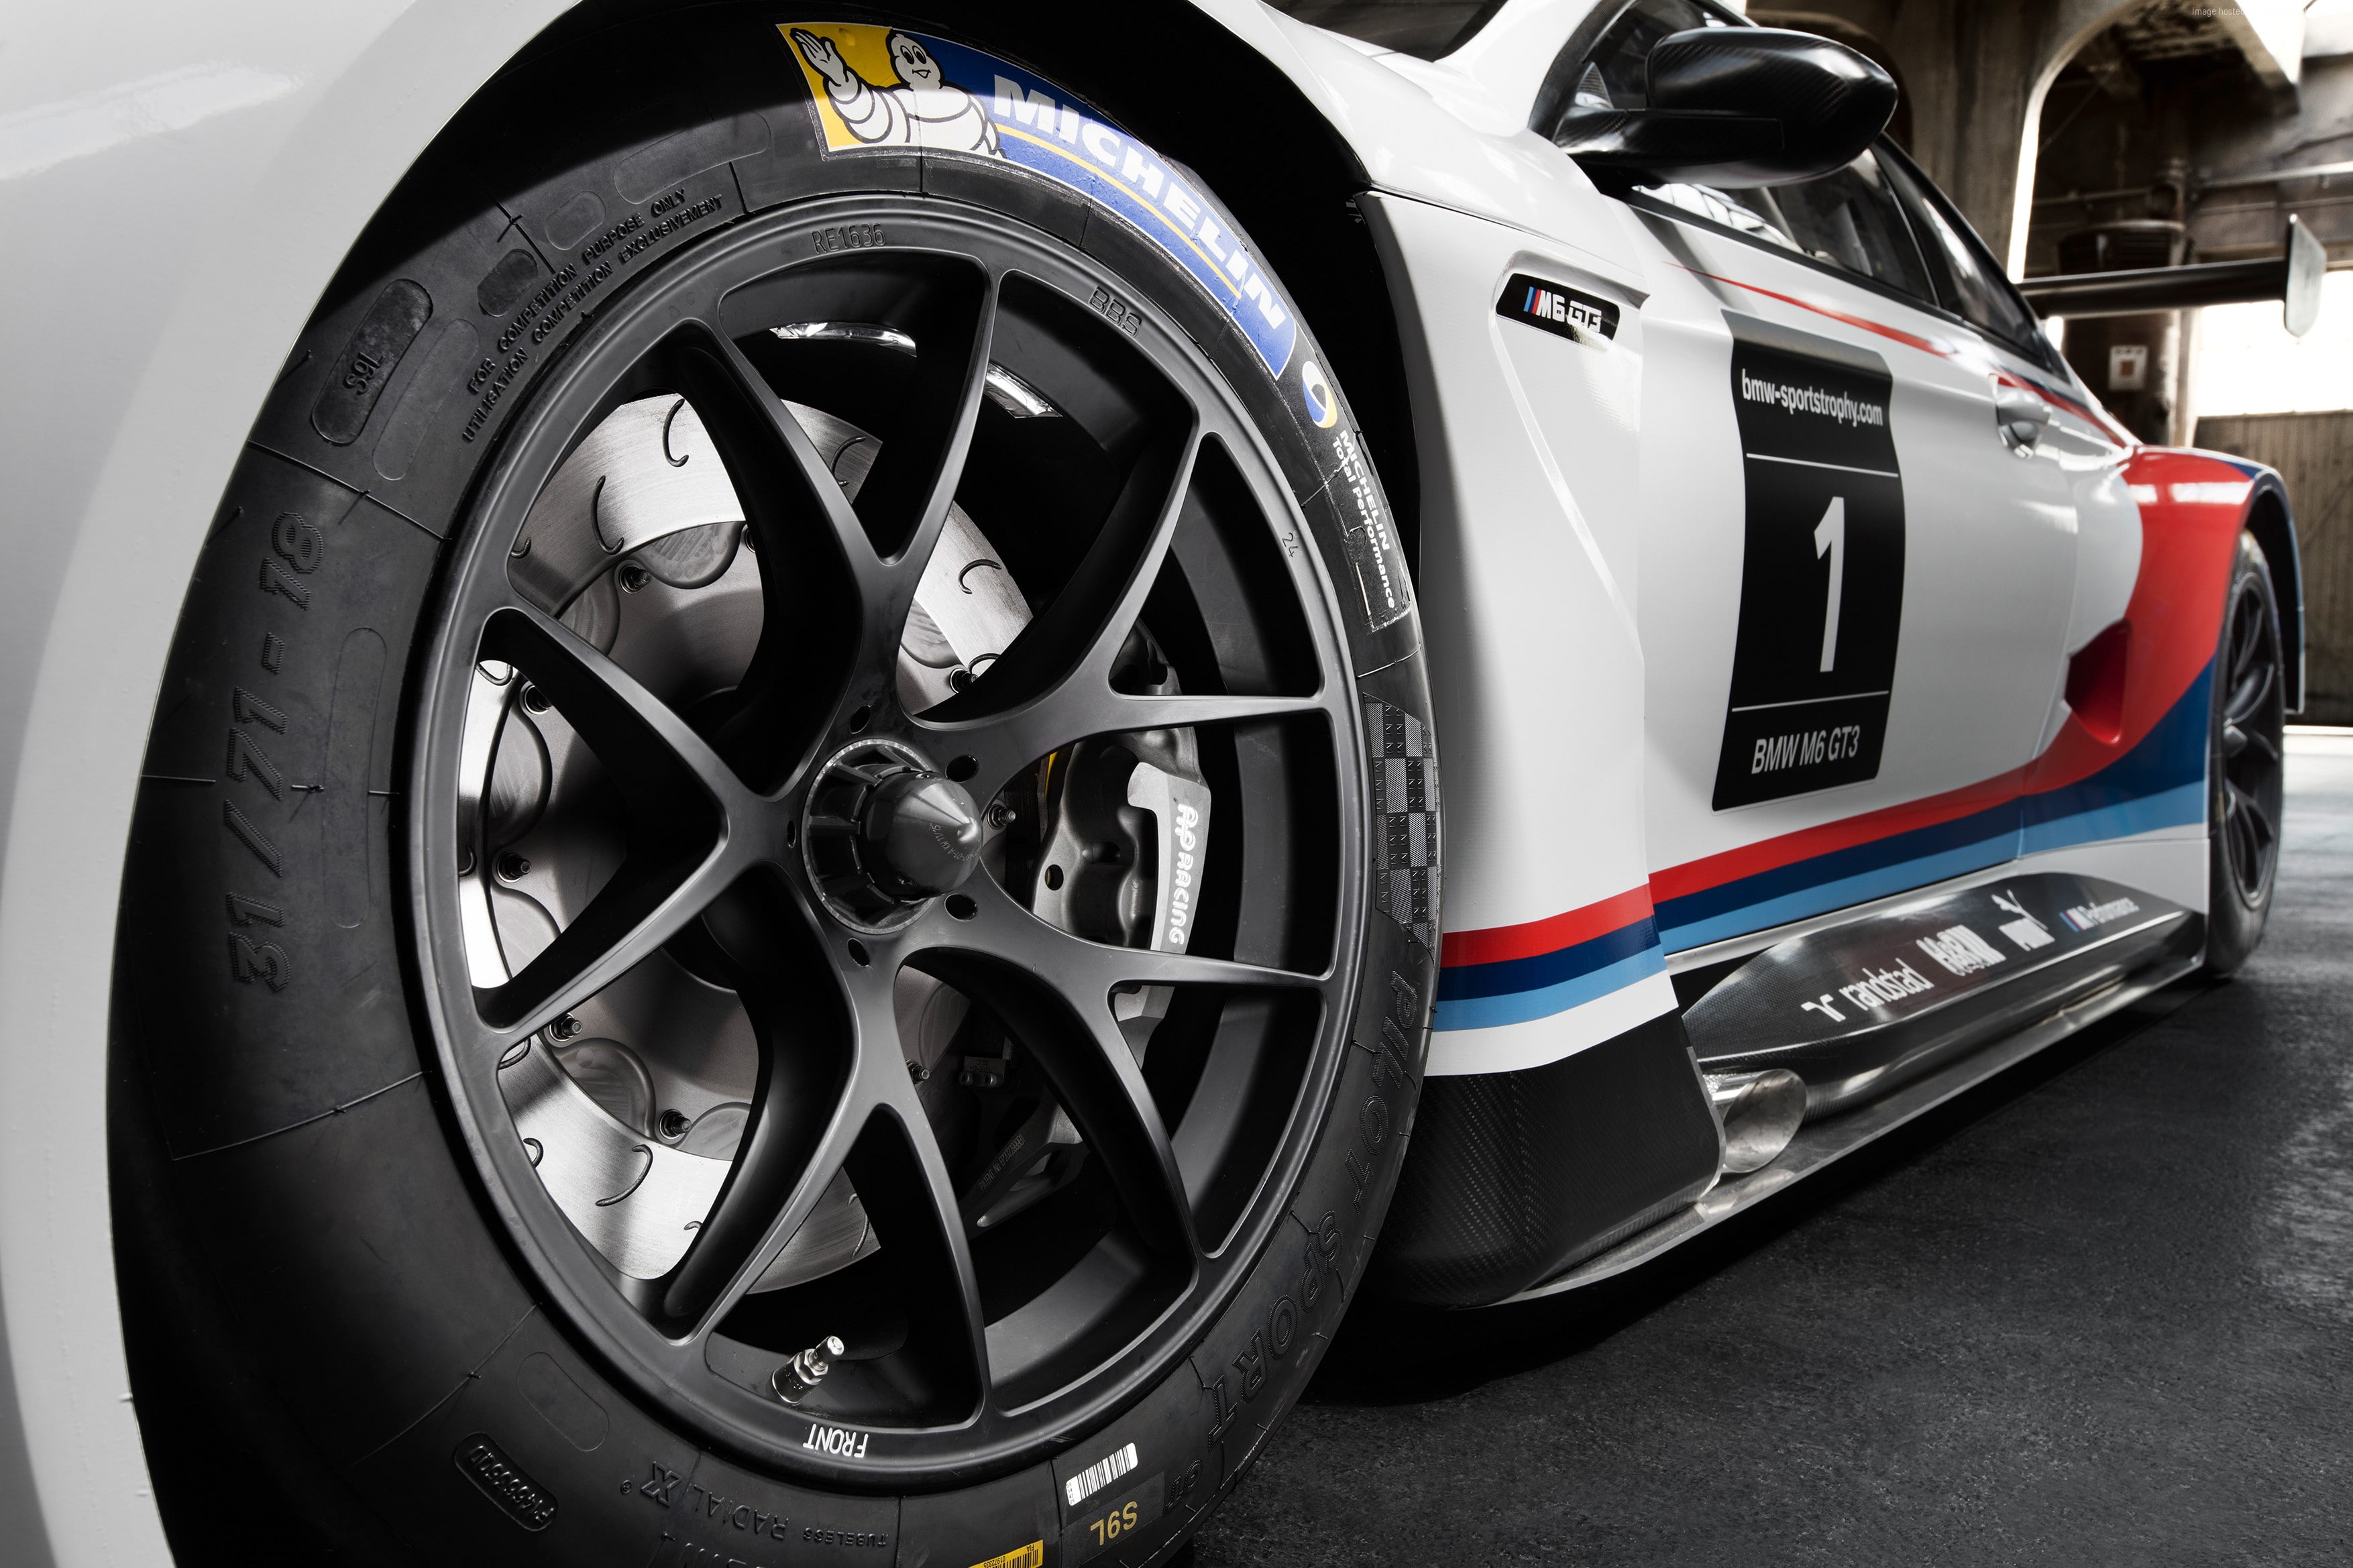 BMW M6 GT3, race car, Frankfurt 2015, sport, mode of transportation